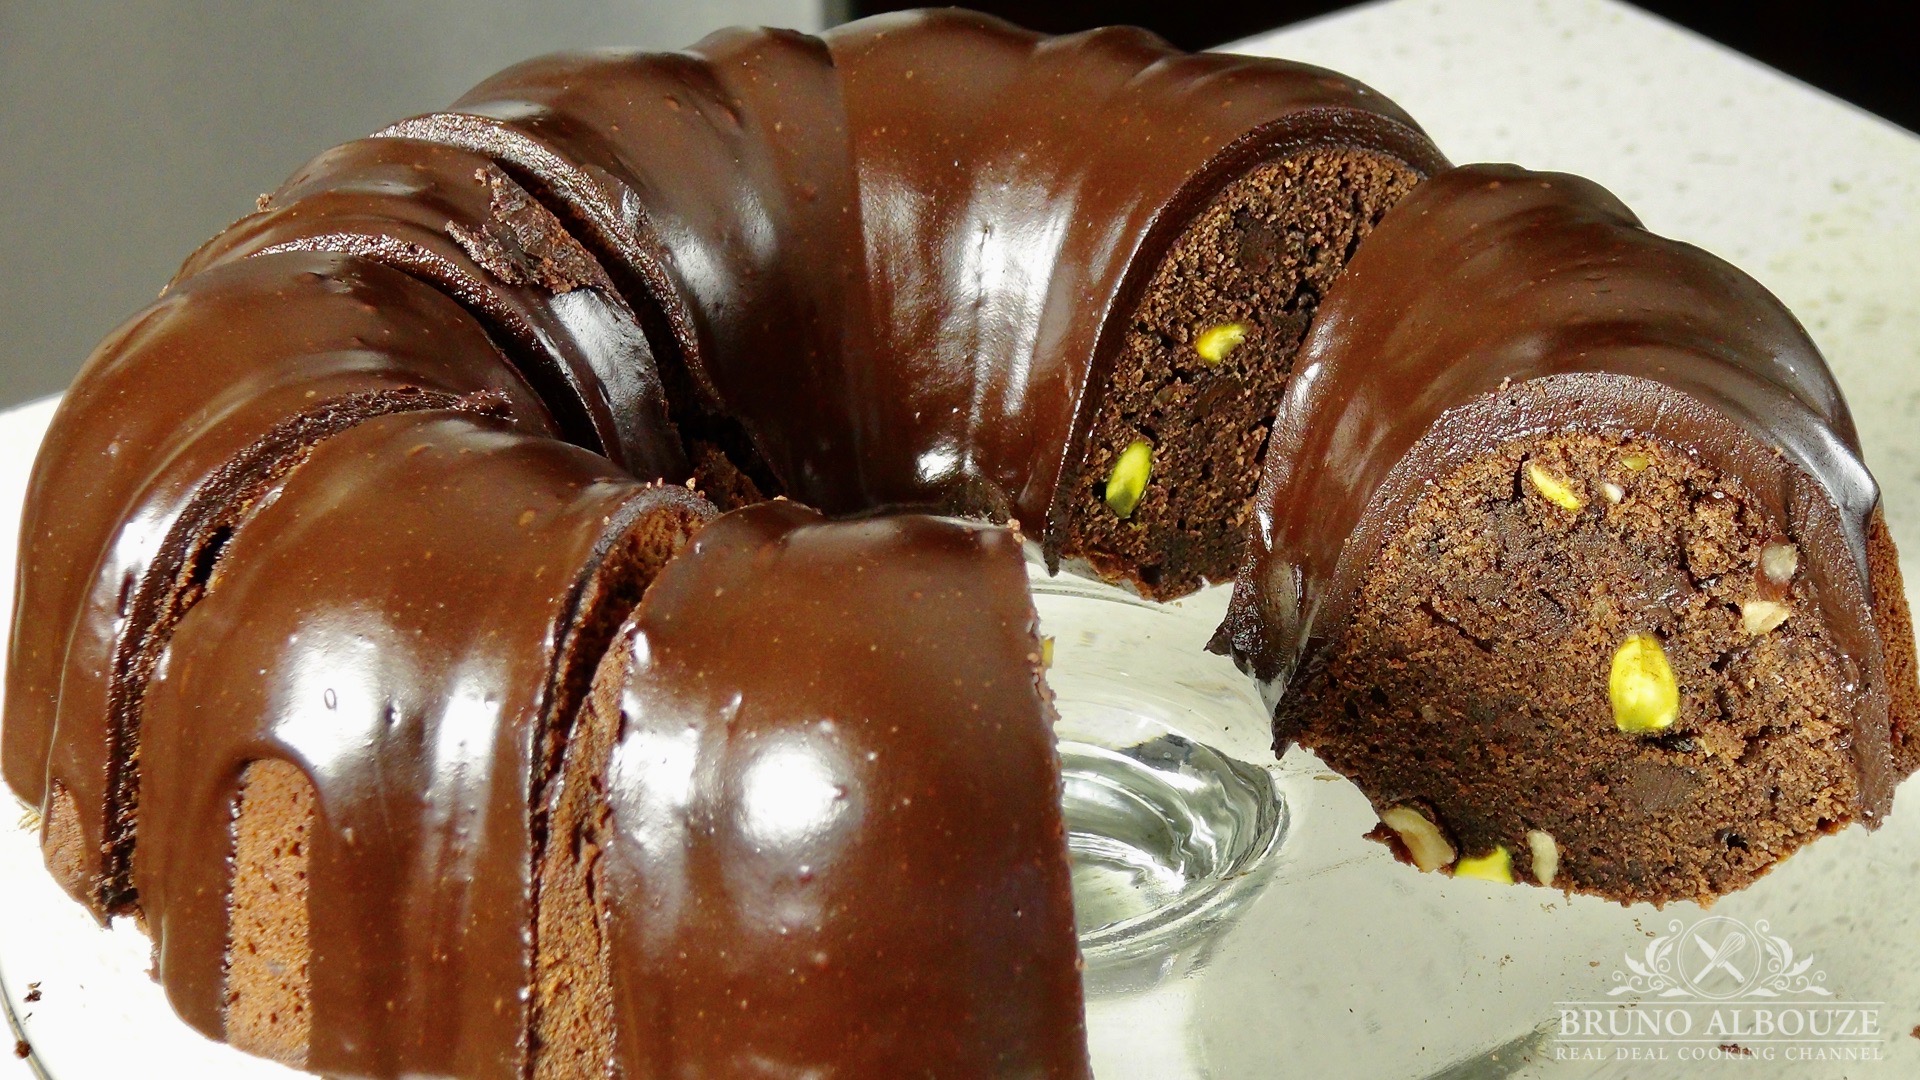 Bruno Albouze Chocolate Almond Cake